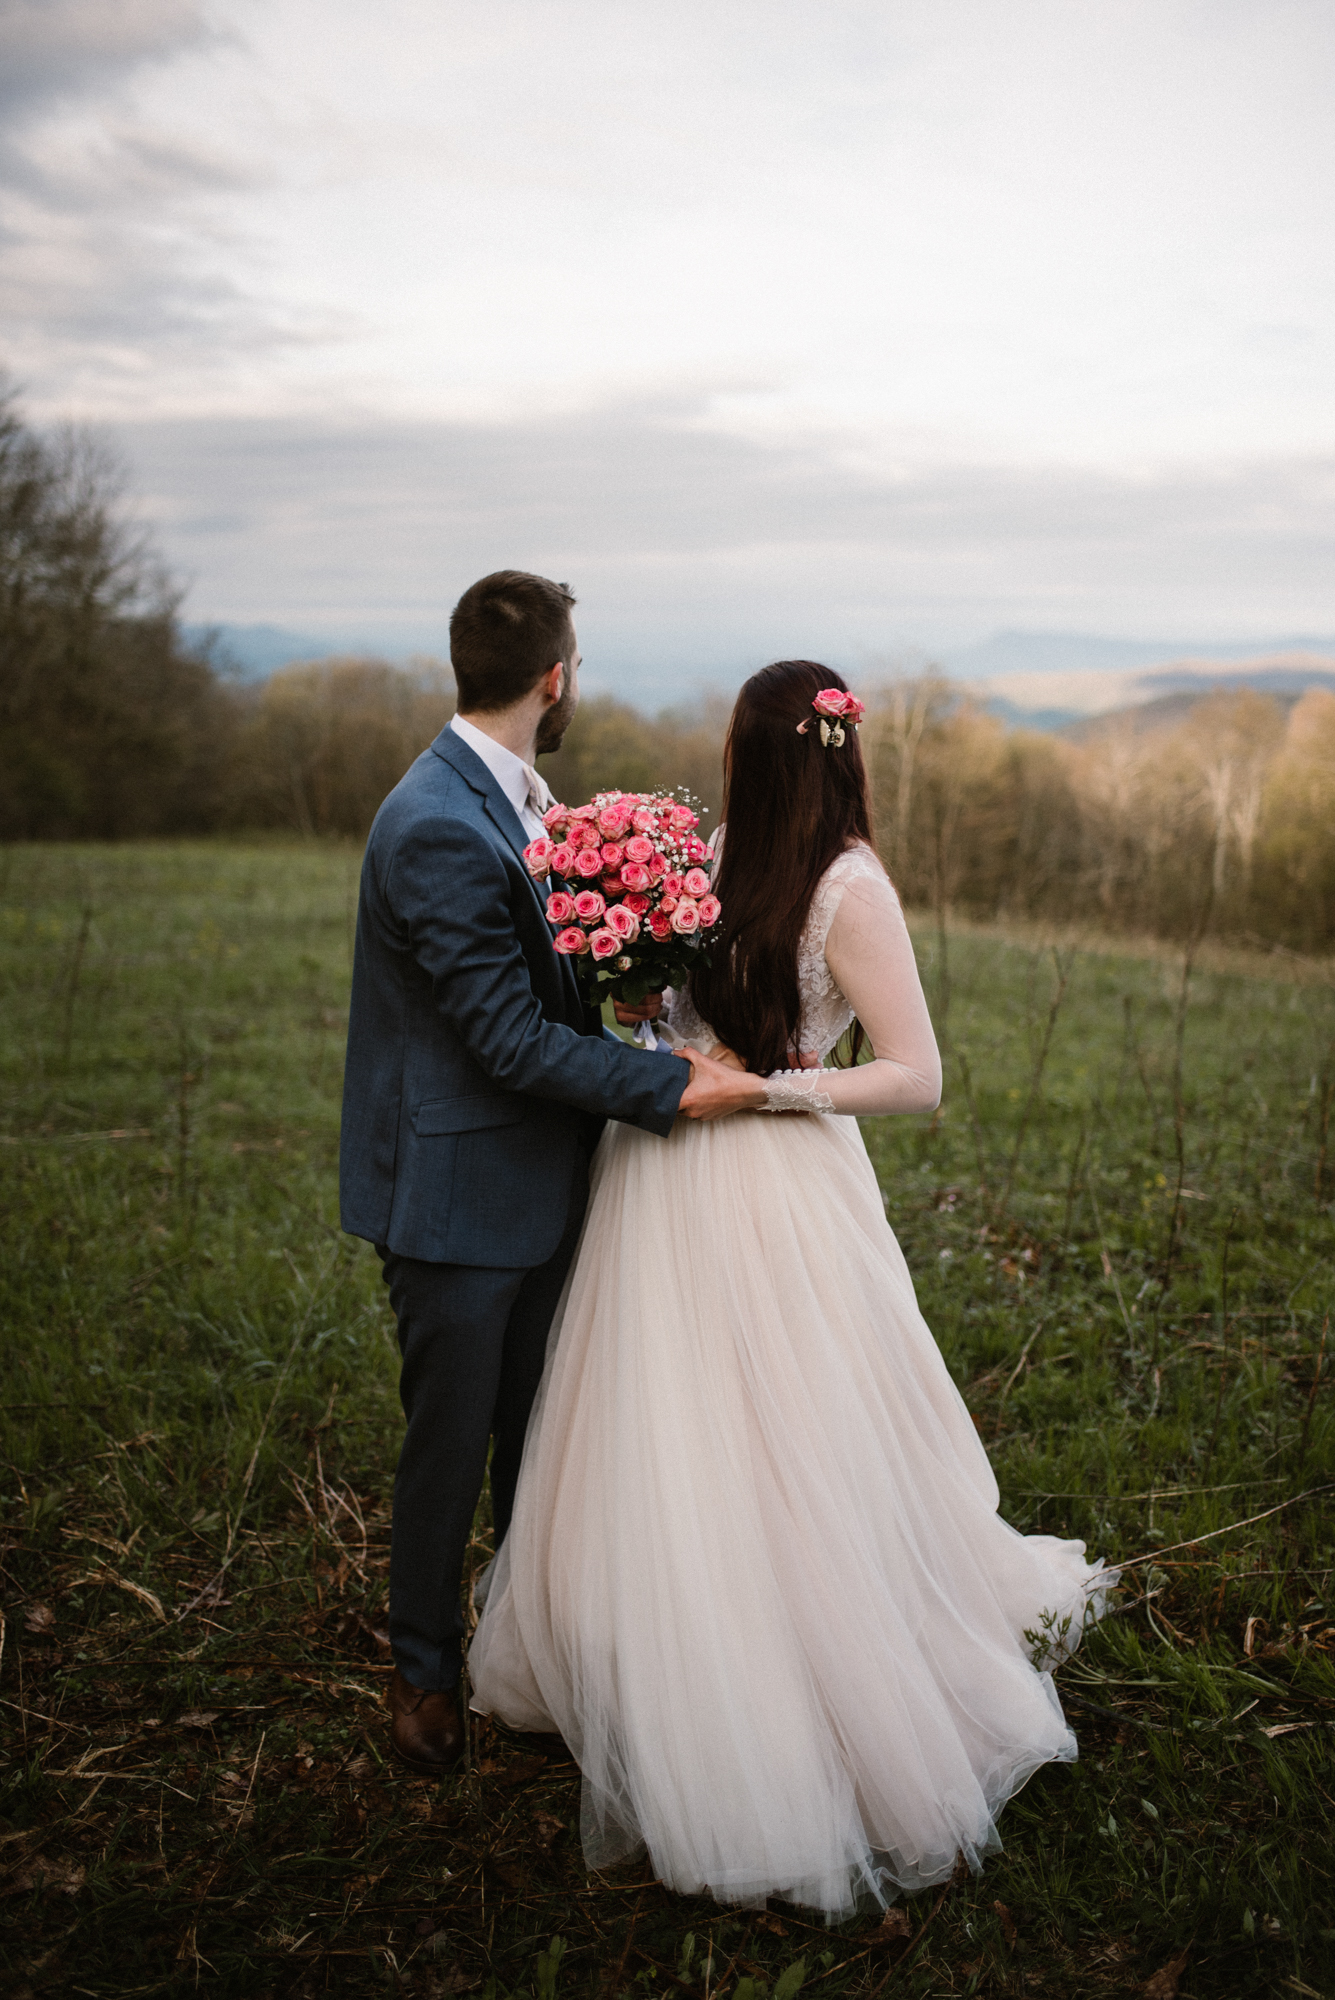 Paula and Andrew - Small Adventurous Wedding in Shenandoah National Park - Blue Ridge Mountain Wedding - White Sails Creative - Mountain Elopement_29.jpg